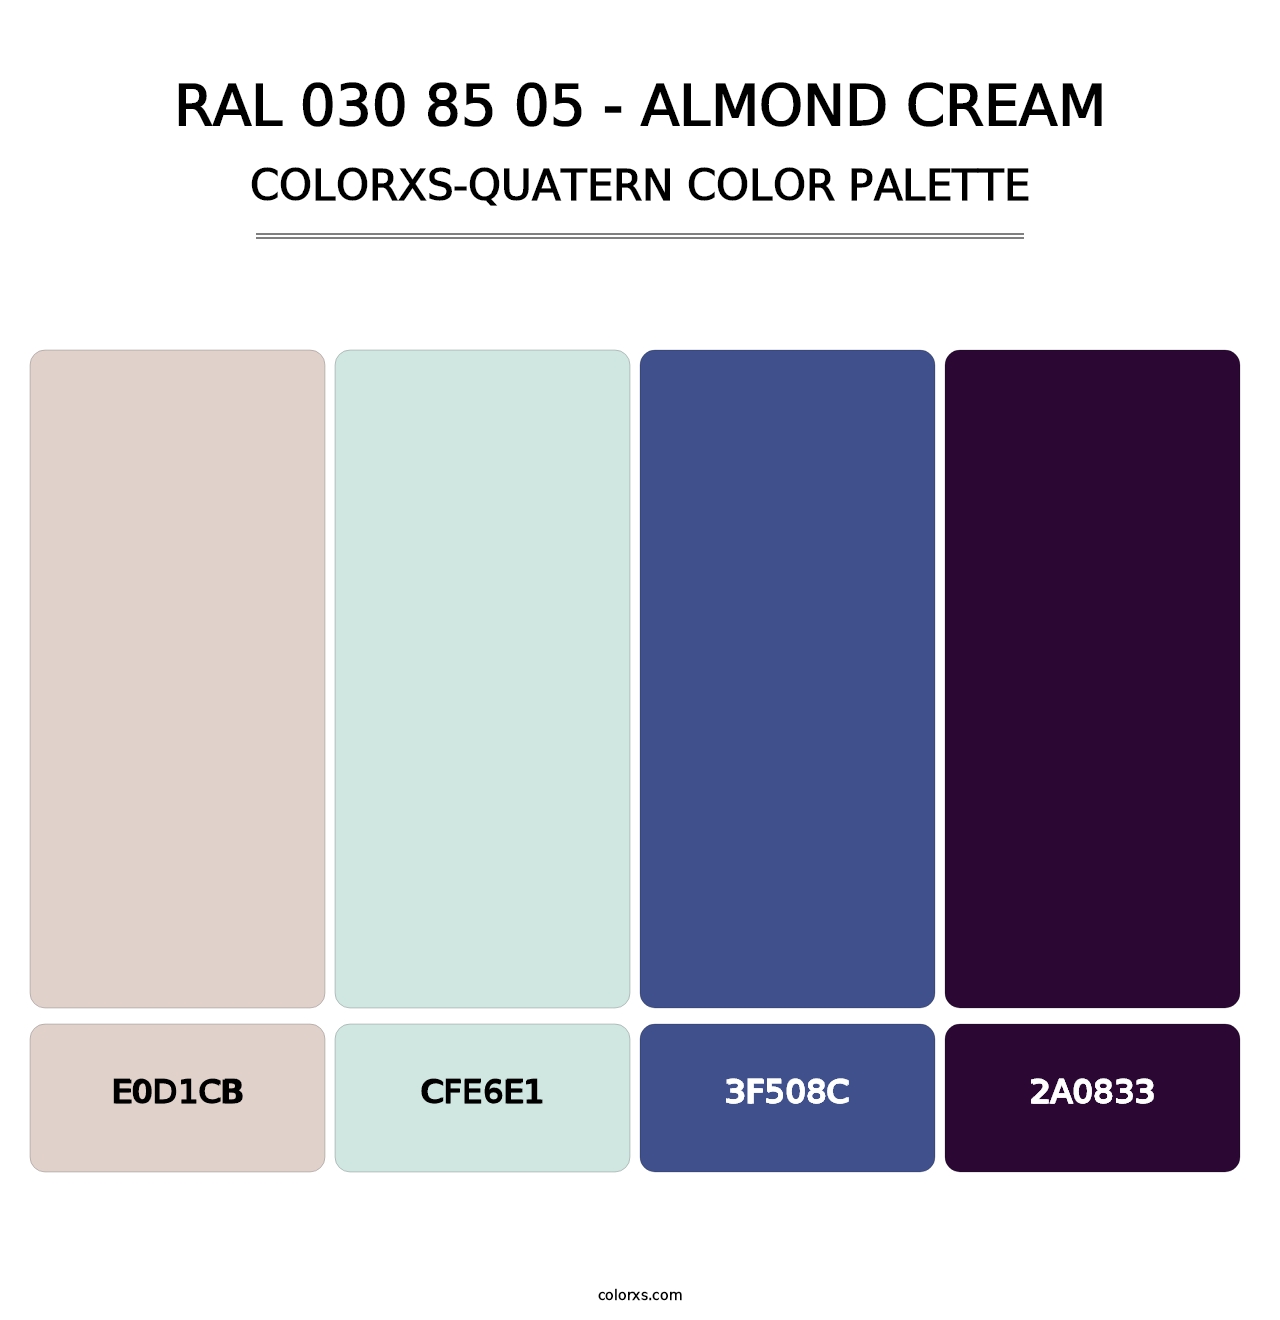 RAL 030 85 05 - Almond Cream - Colorxs Quatern Palette